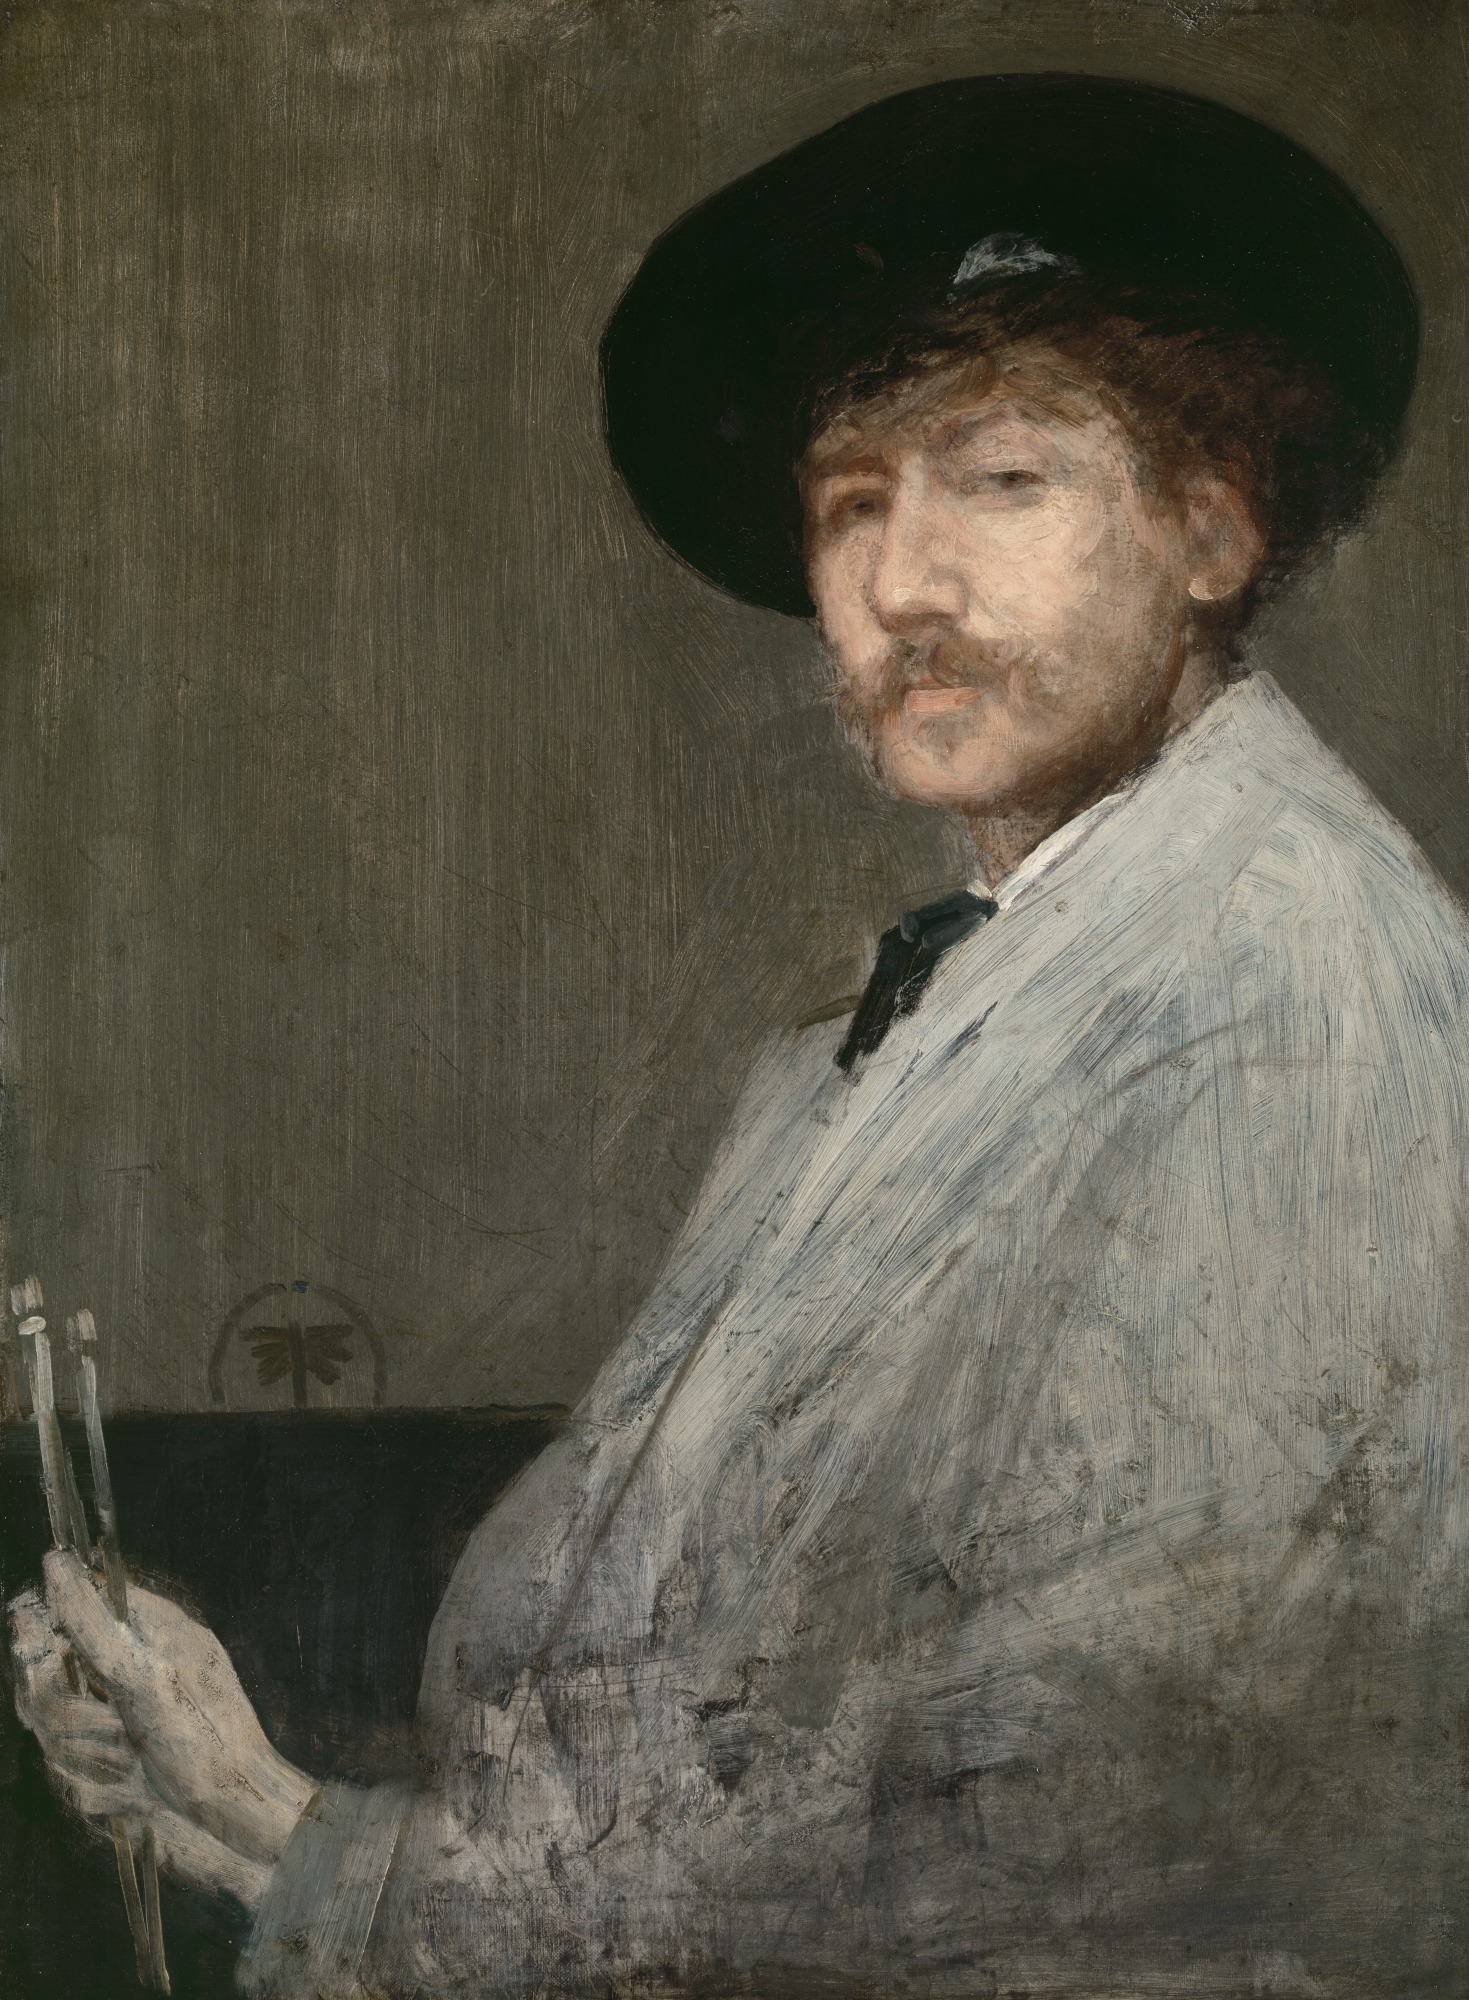 James Abbott McNeill Whistler - 10 de julio de 1834 - 17 de julio de 1903